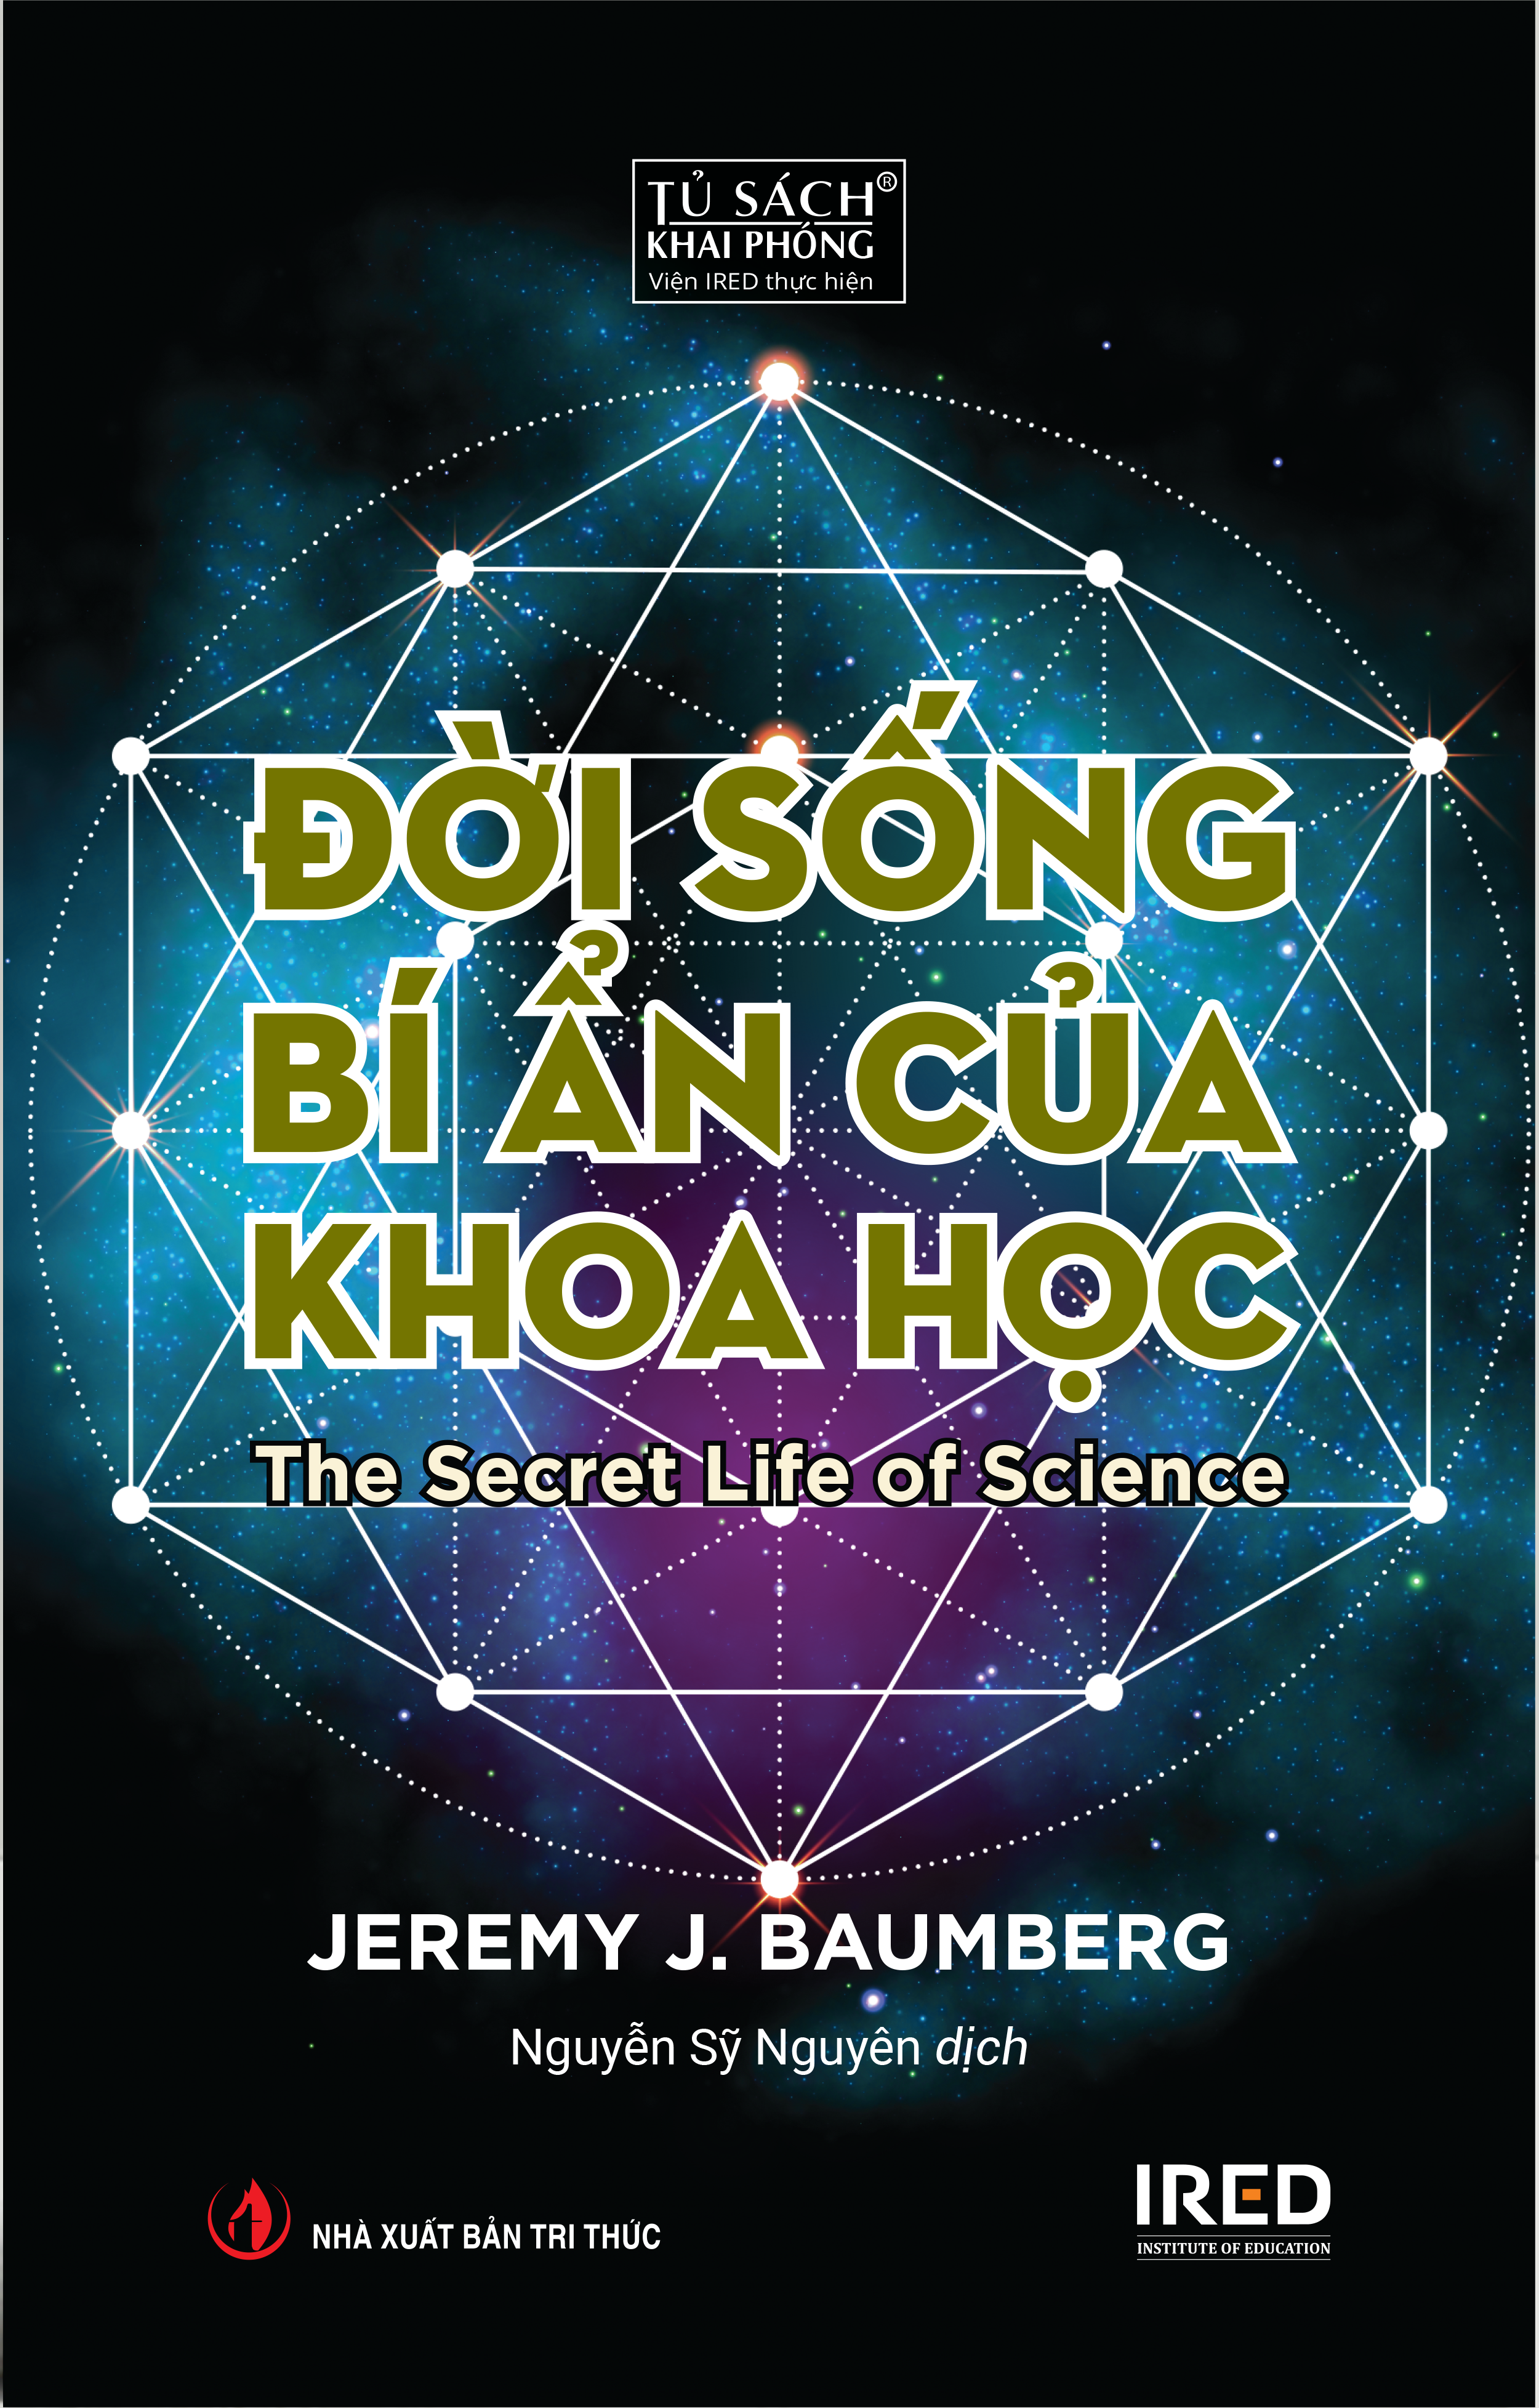 Sách IRED Books - Đời sống bí ẩn của khoa học (The Secret Life of Science) - Jeremy J. Baumberg